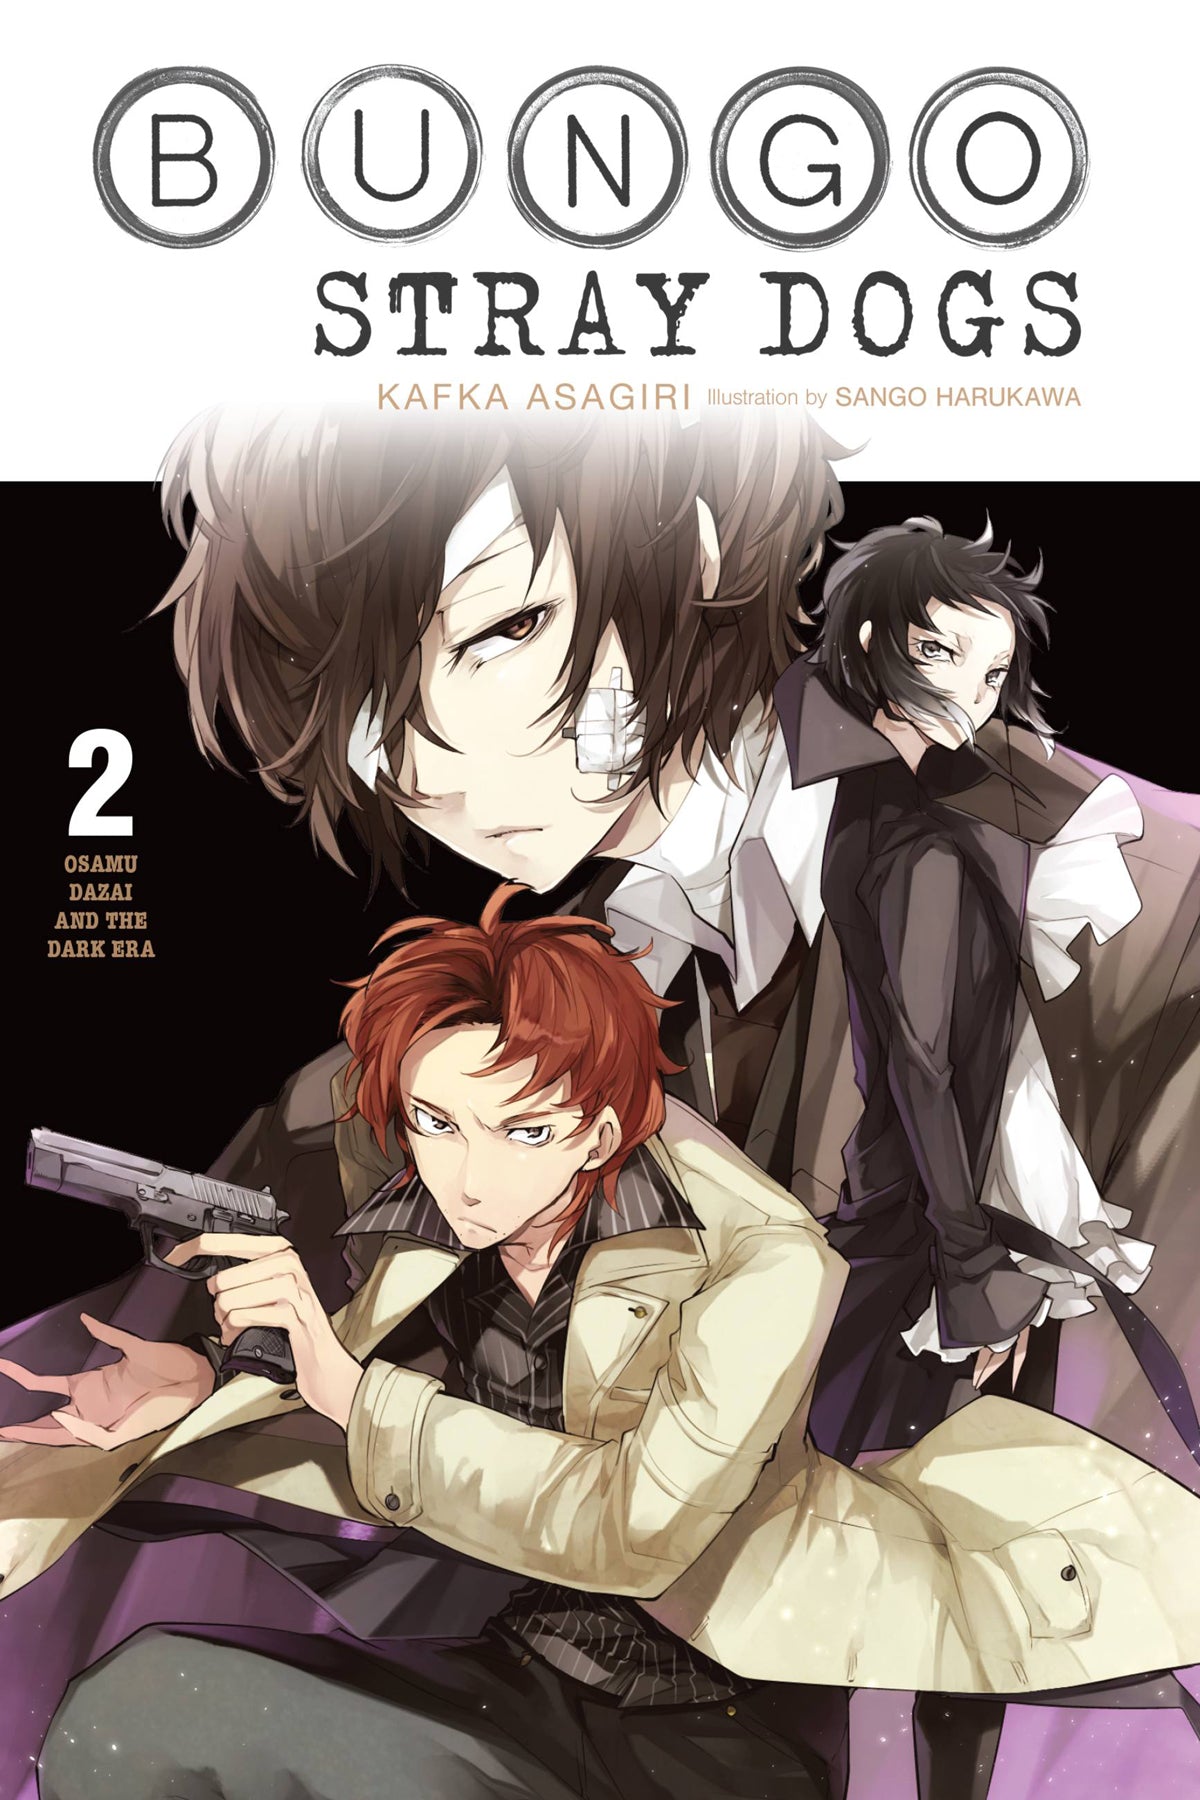 Bungo Stray Dogs Vol. 02 (Light Novel): Osamu Dazai and the Dark Era (Out of Print Indefinitely)